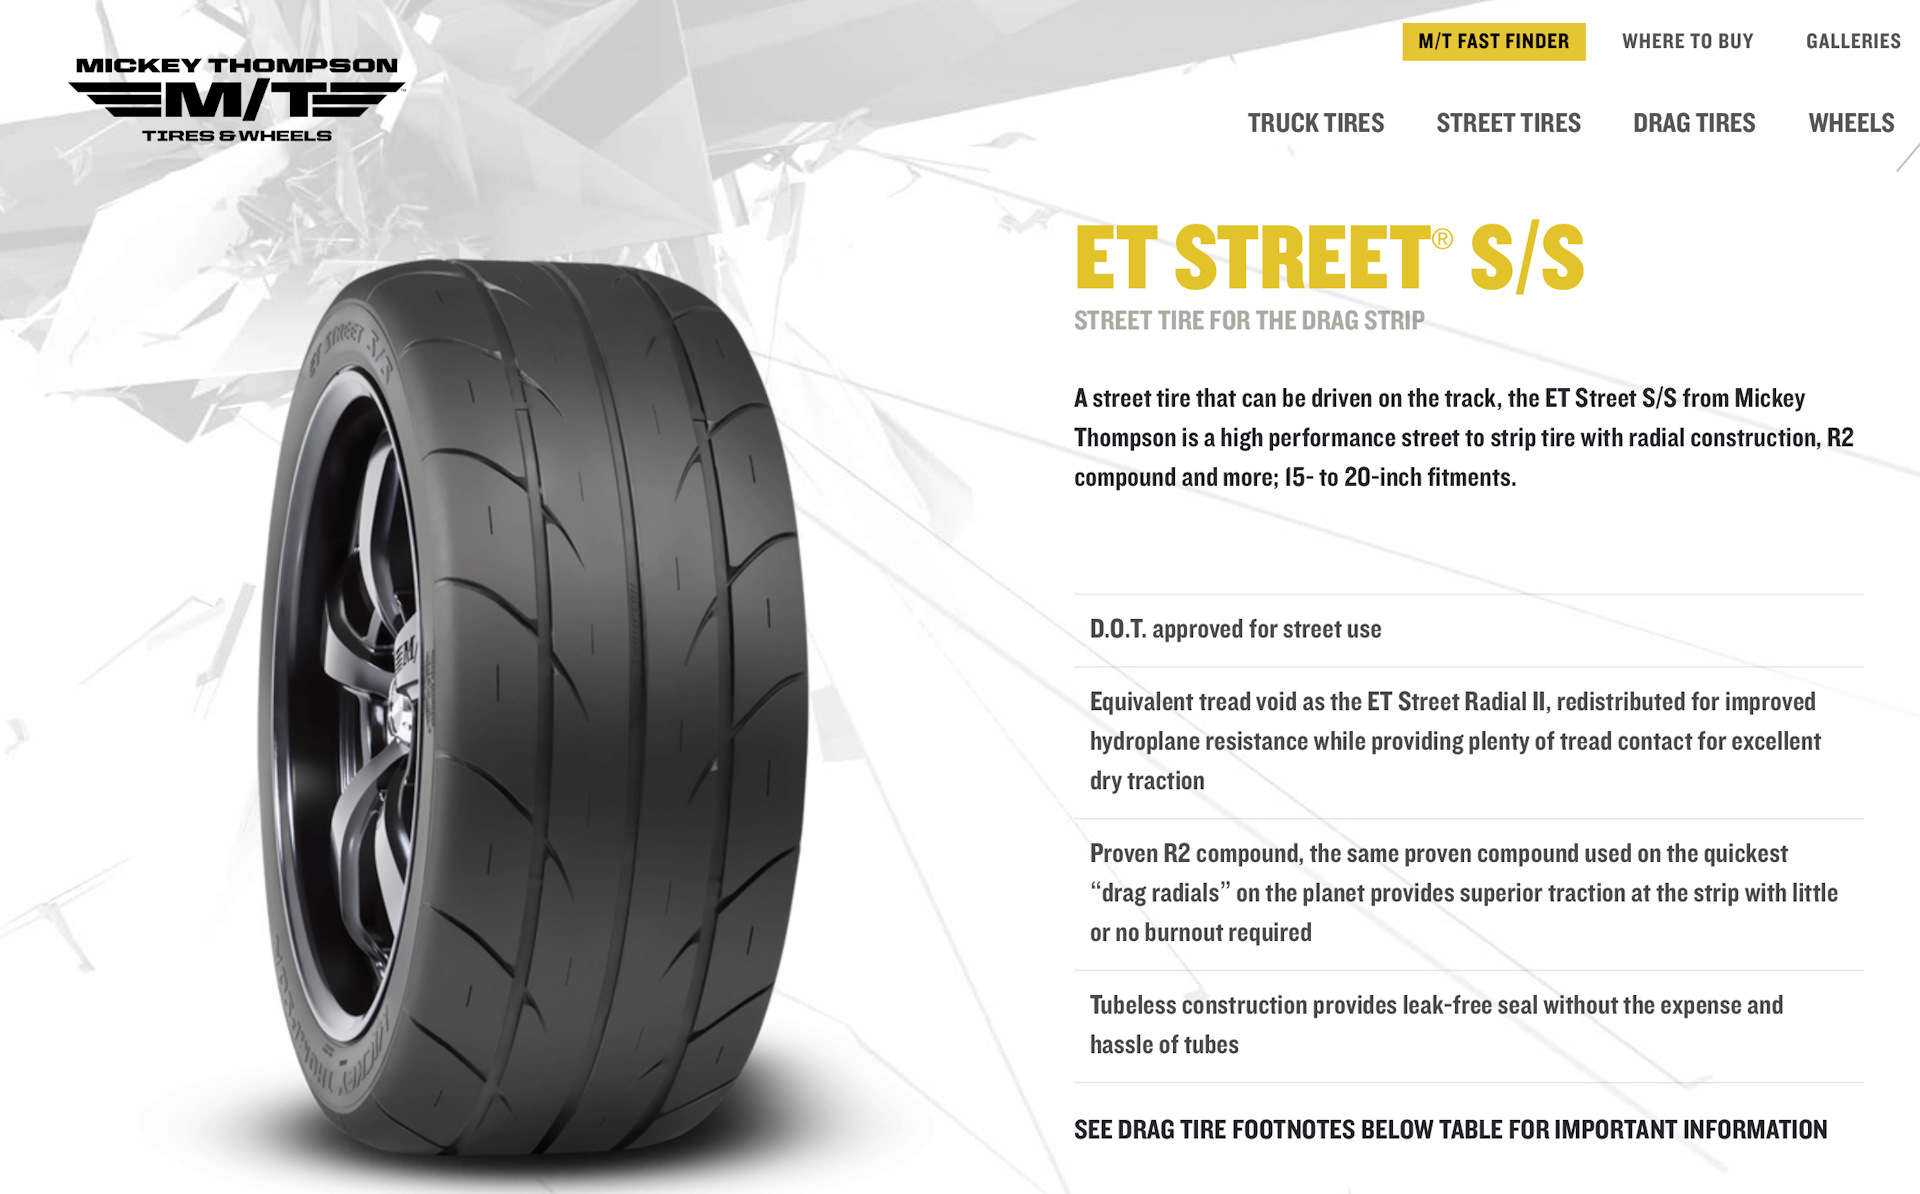 Street performance tires